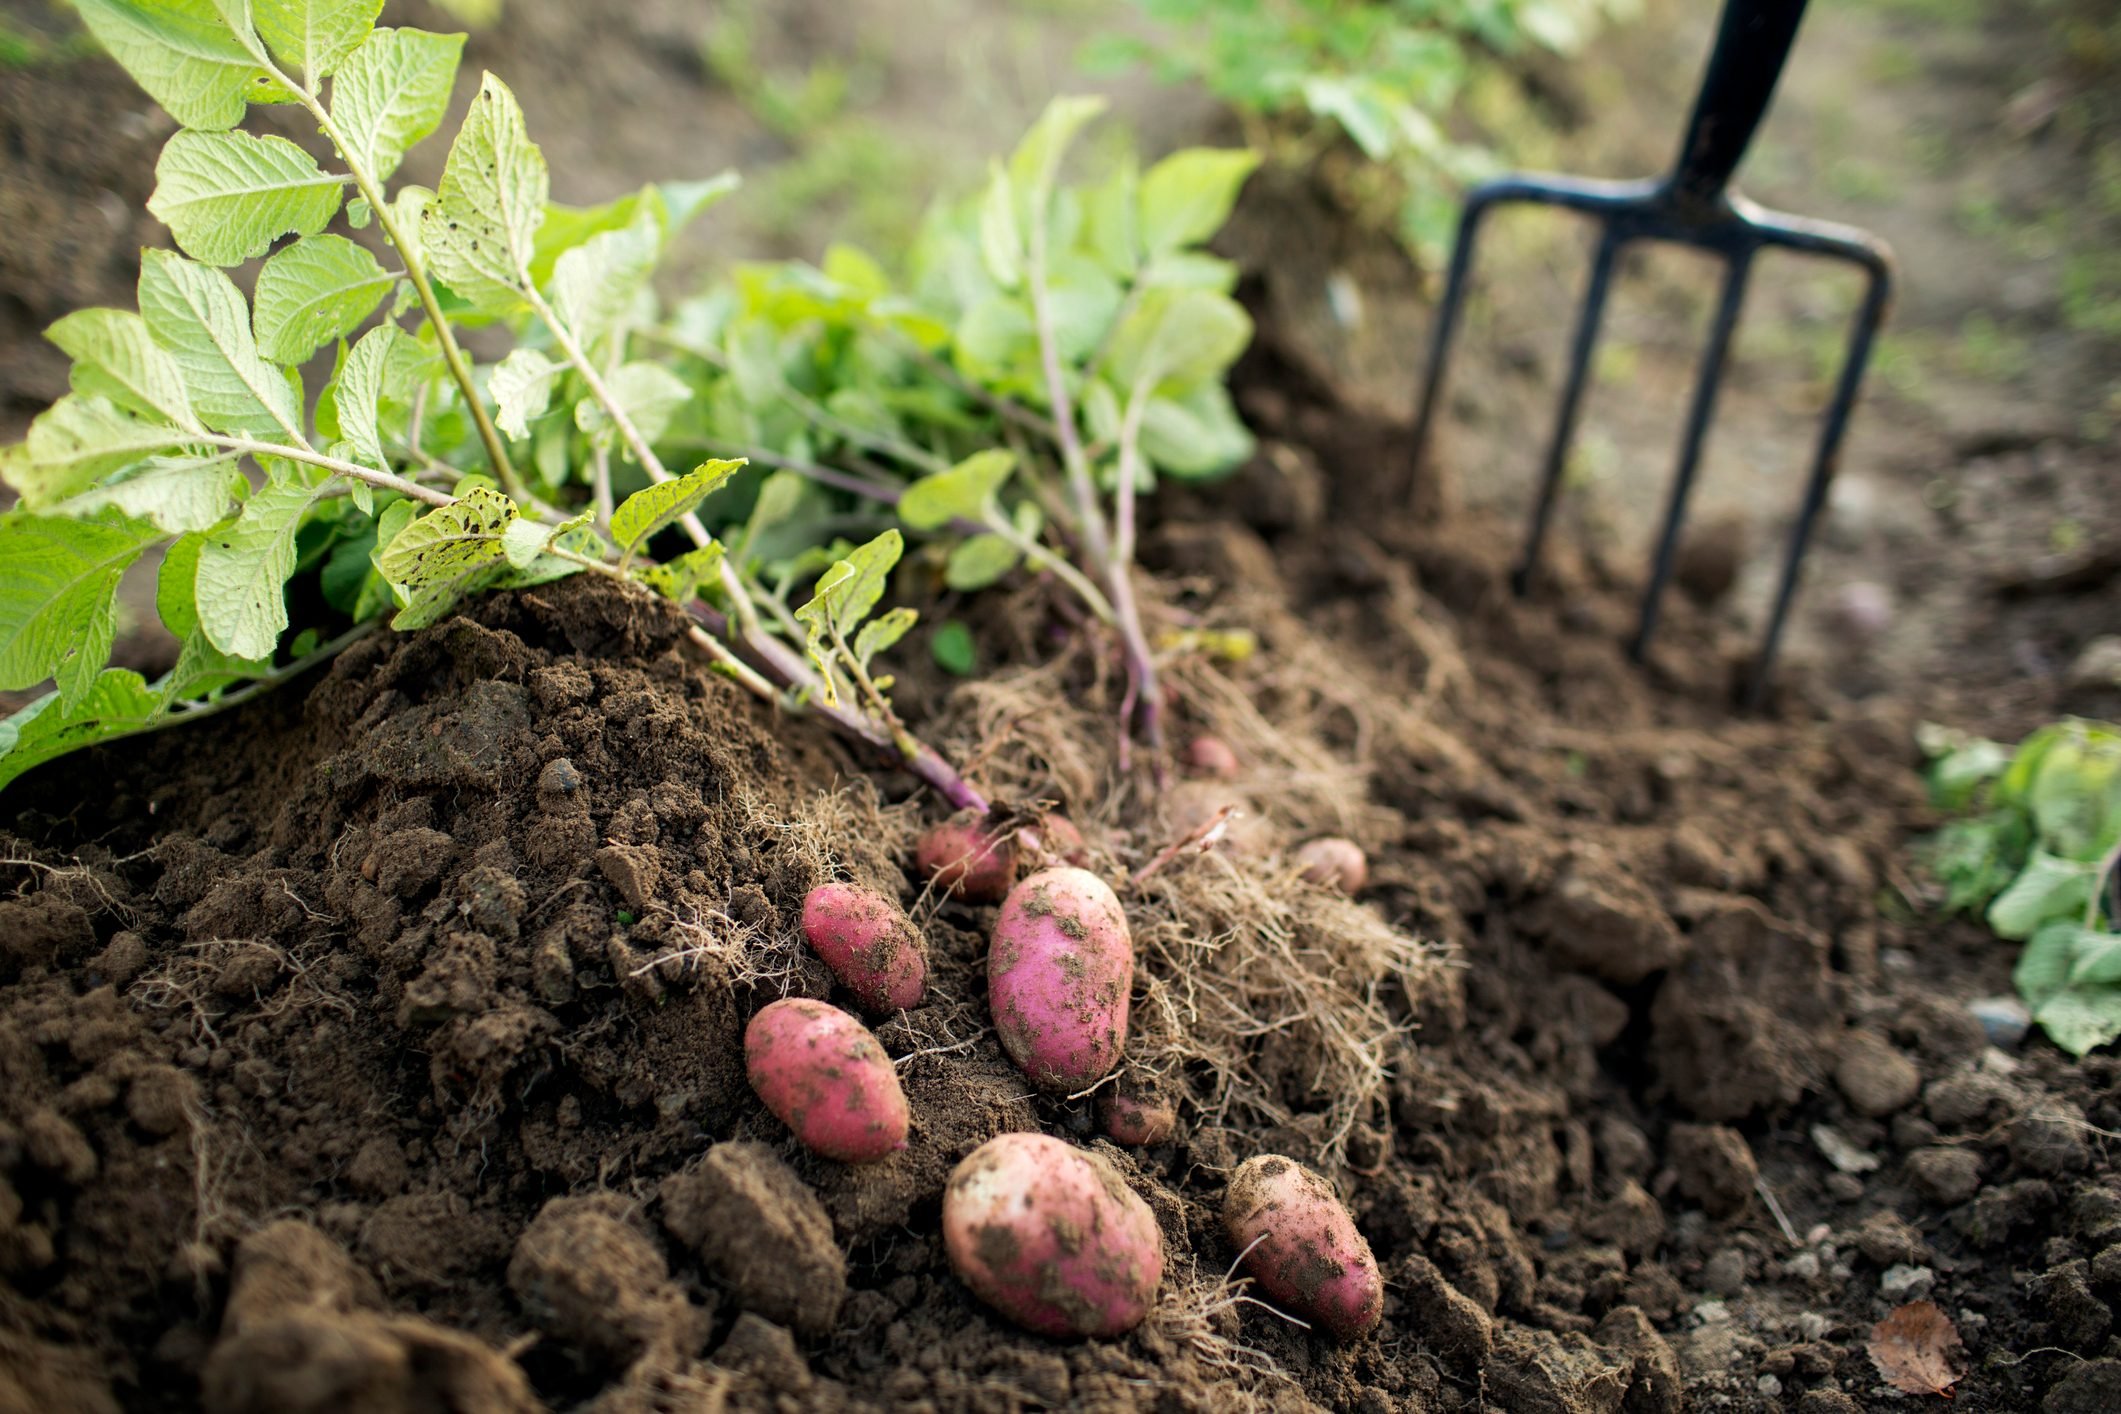 How to Grow Potatoes in a Vegetable Garden